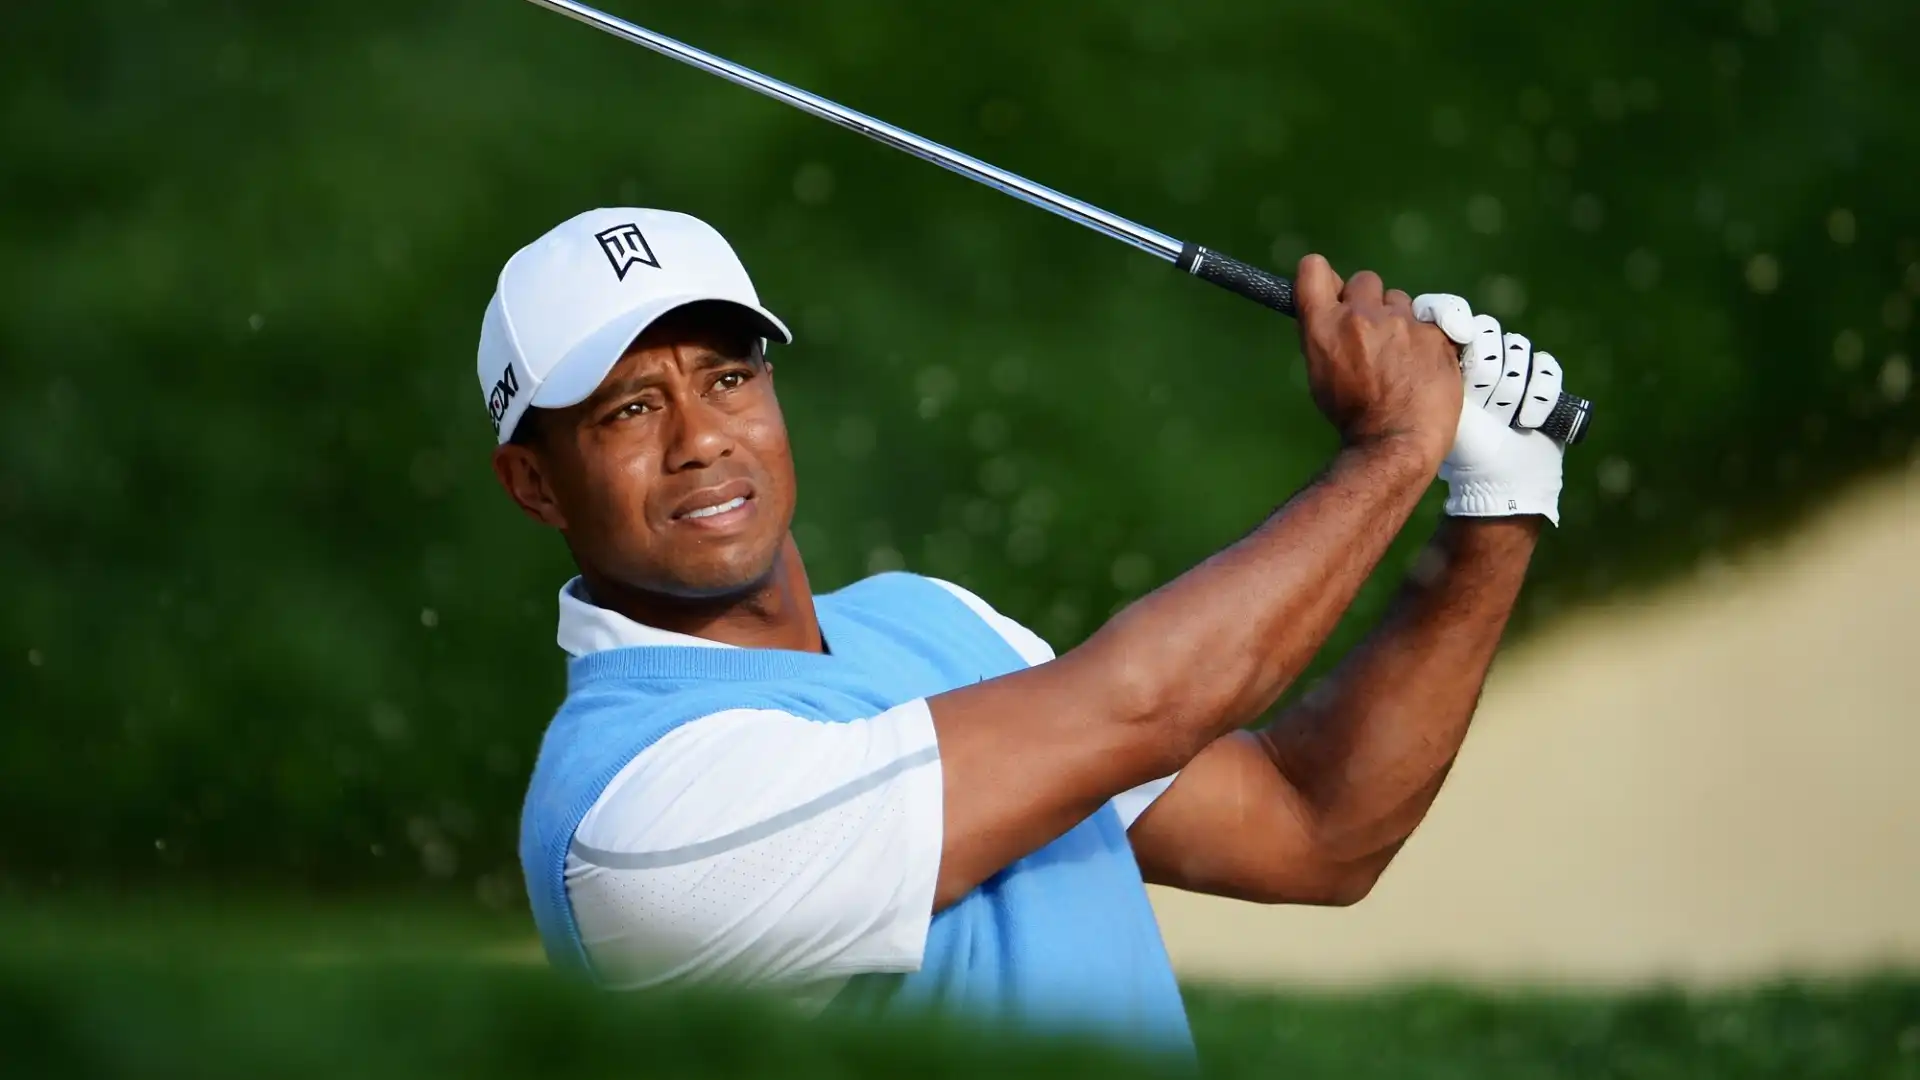 2013: Tiger Woods (Golf), guadagni totali stimati 78,1 milioni di dollari